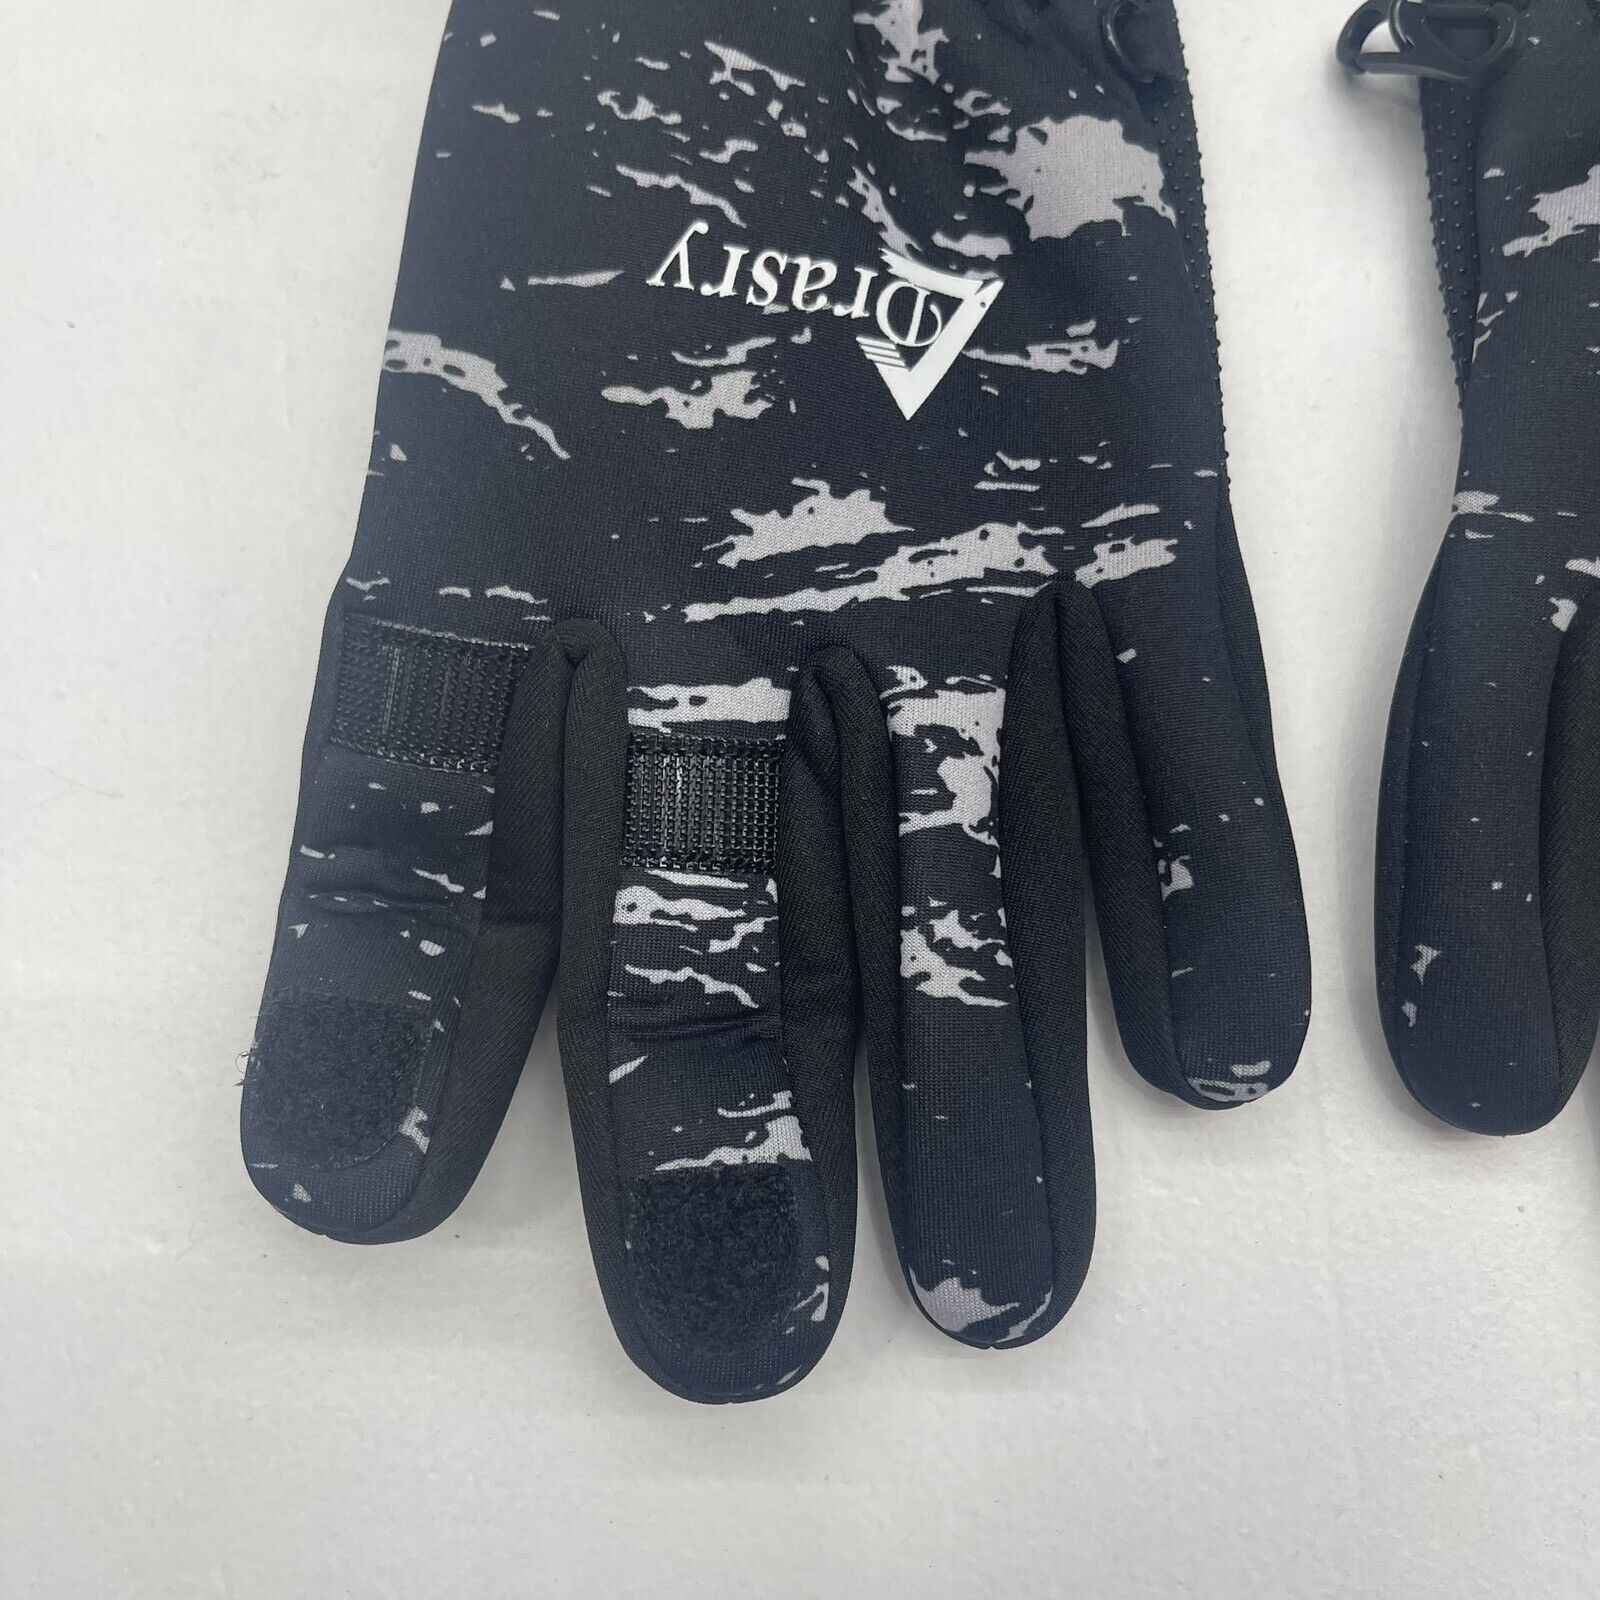 Drasry Black Neoprene Fishing Gloves Adults Size Large NWOT - beyond  exchange